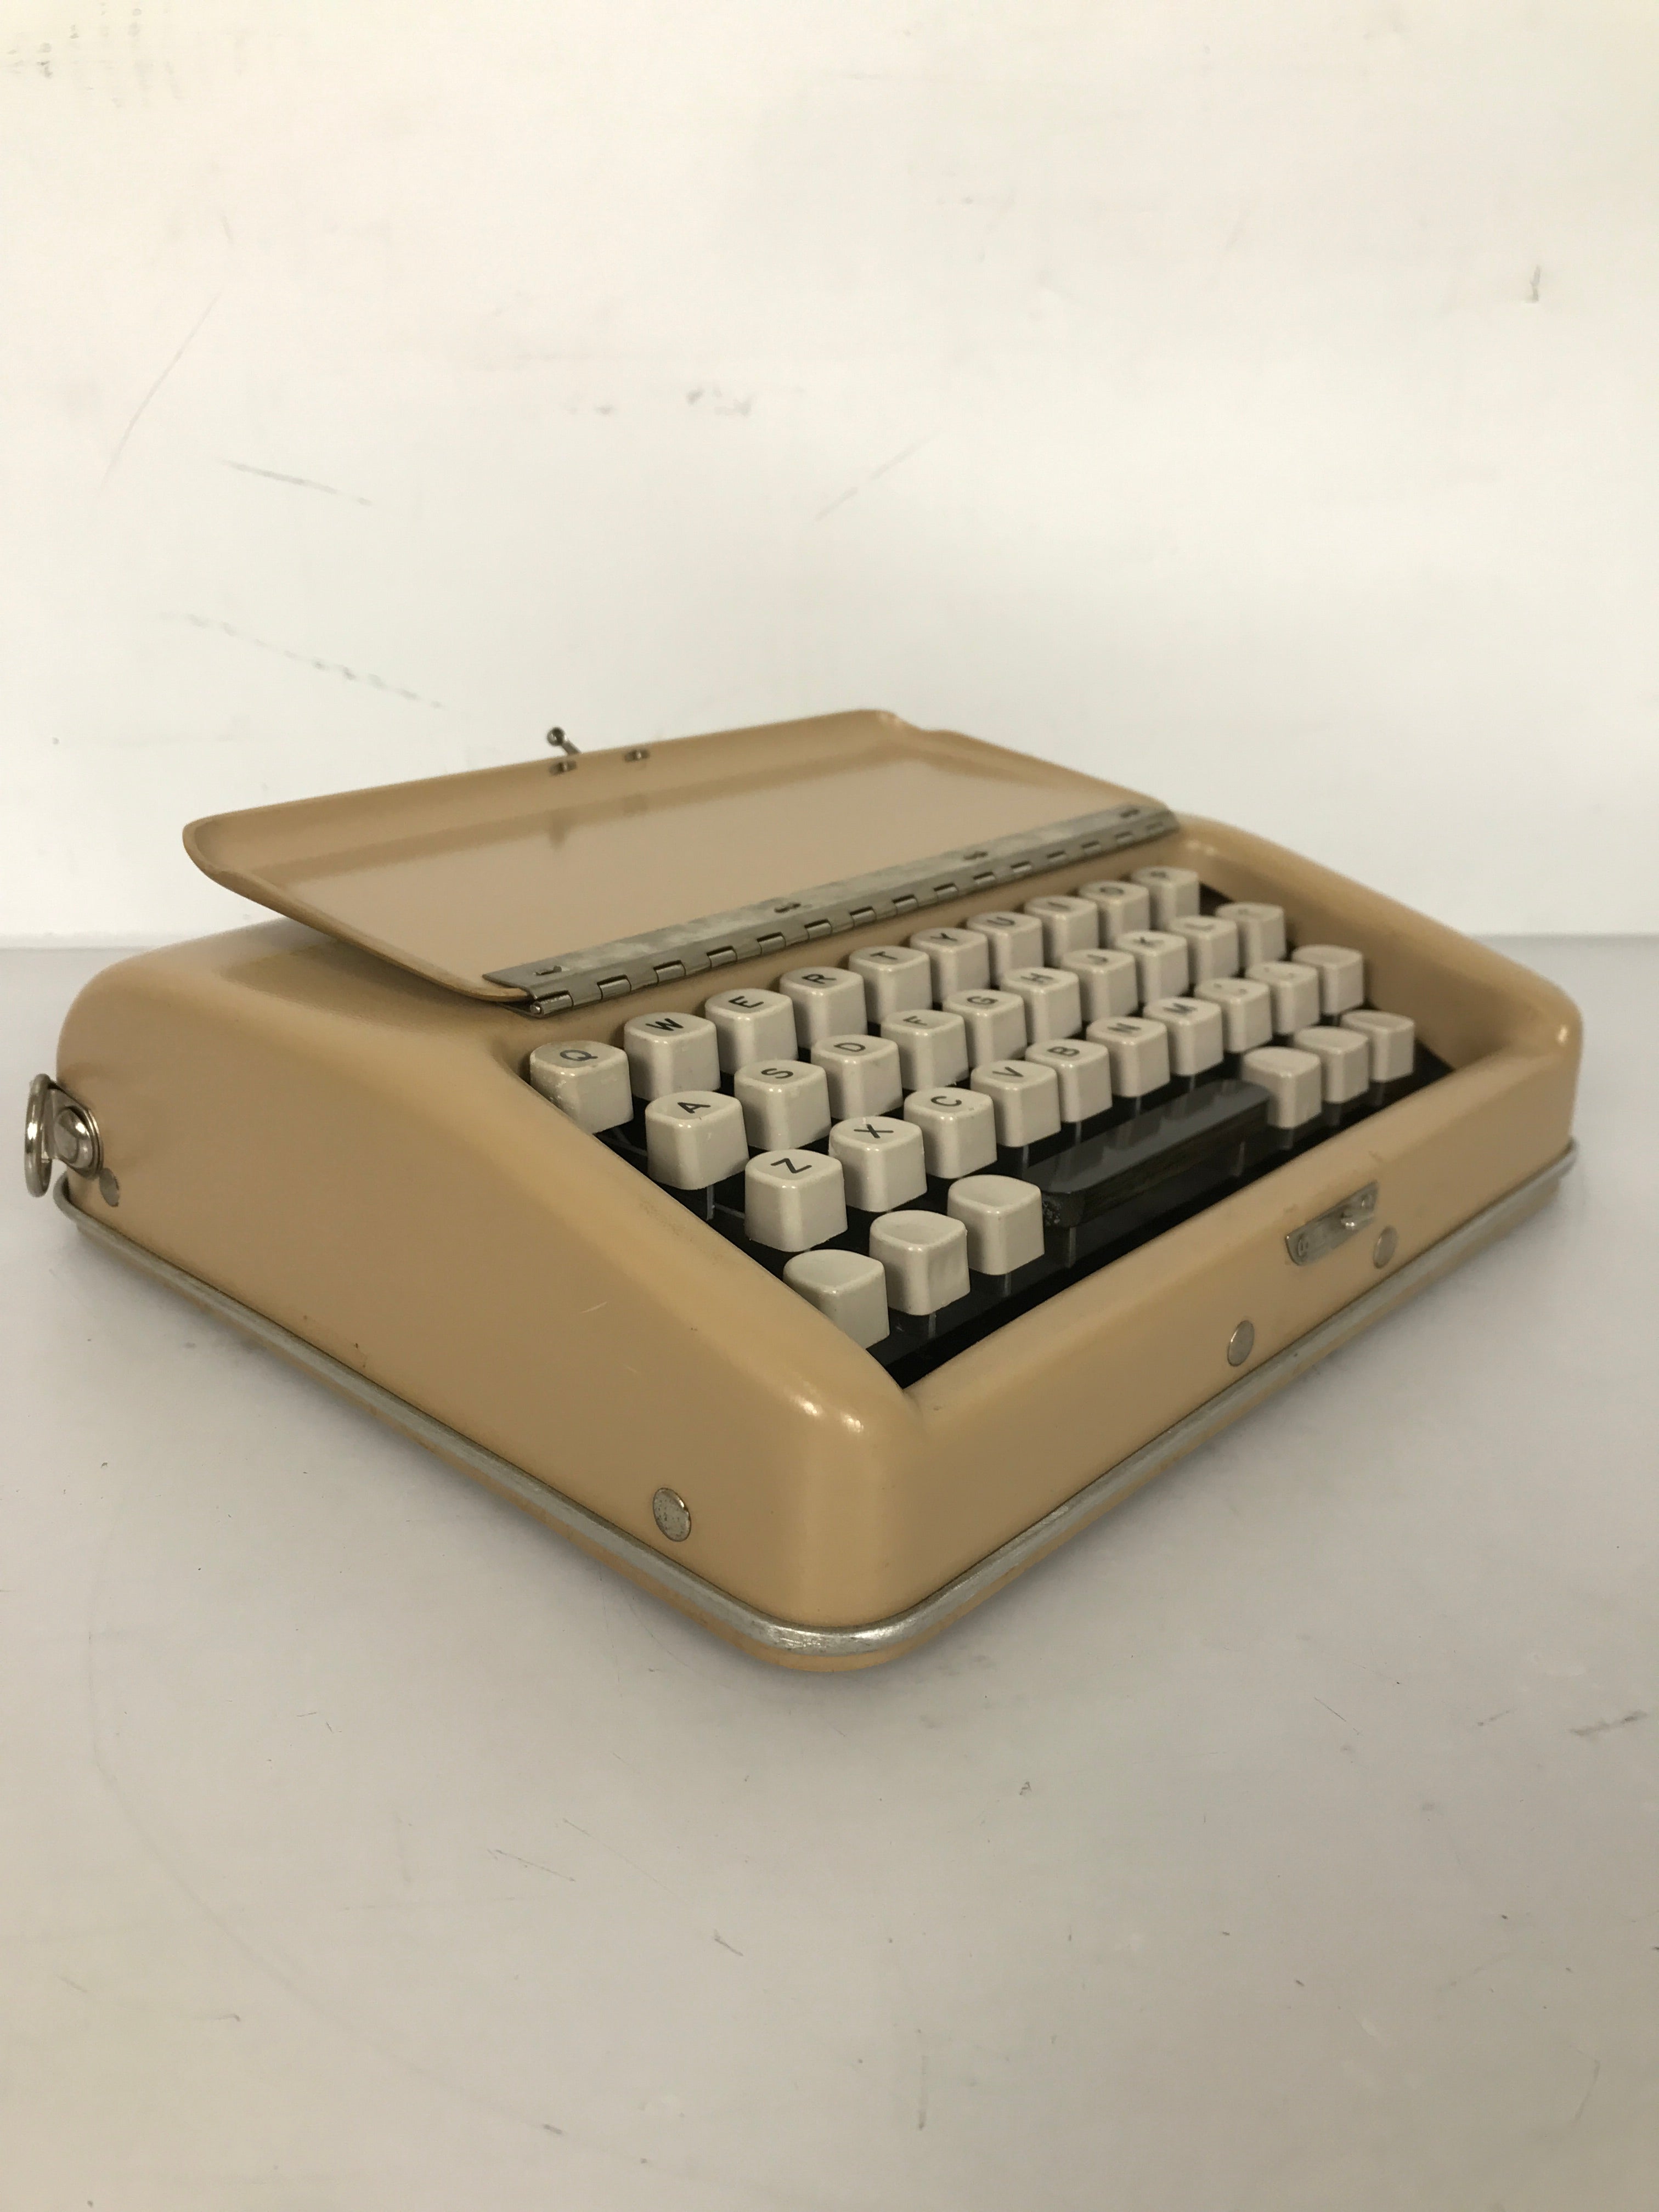 Scarce Vintage Tellatouch Braille Communication Machine